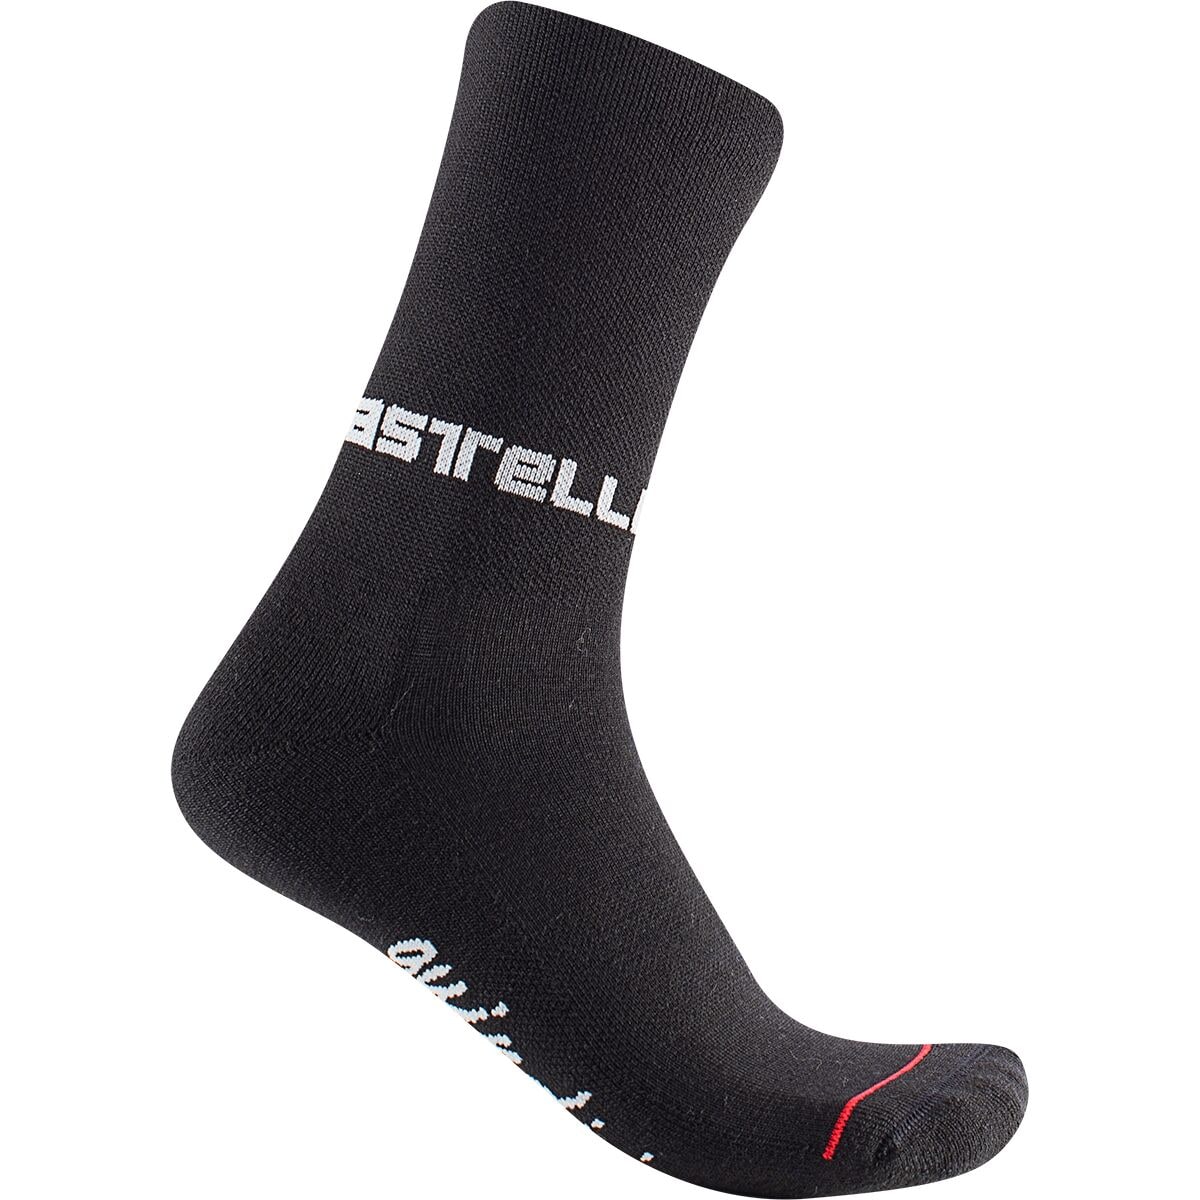 Castelli Quindici Soft Merino Sock - Women's Black, L/XL